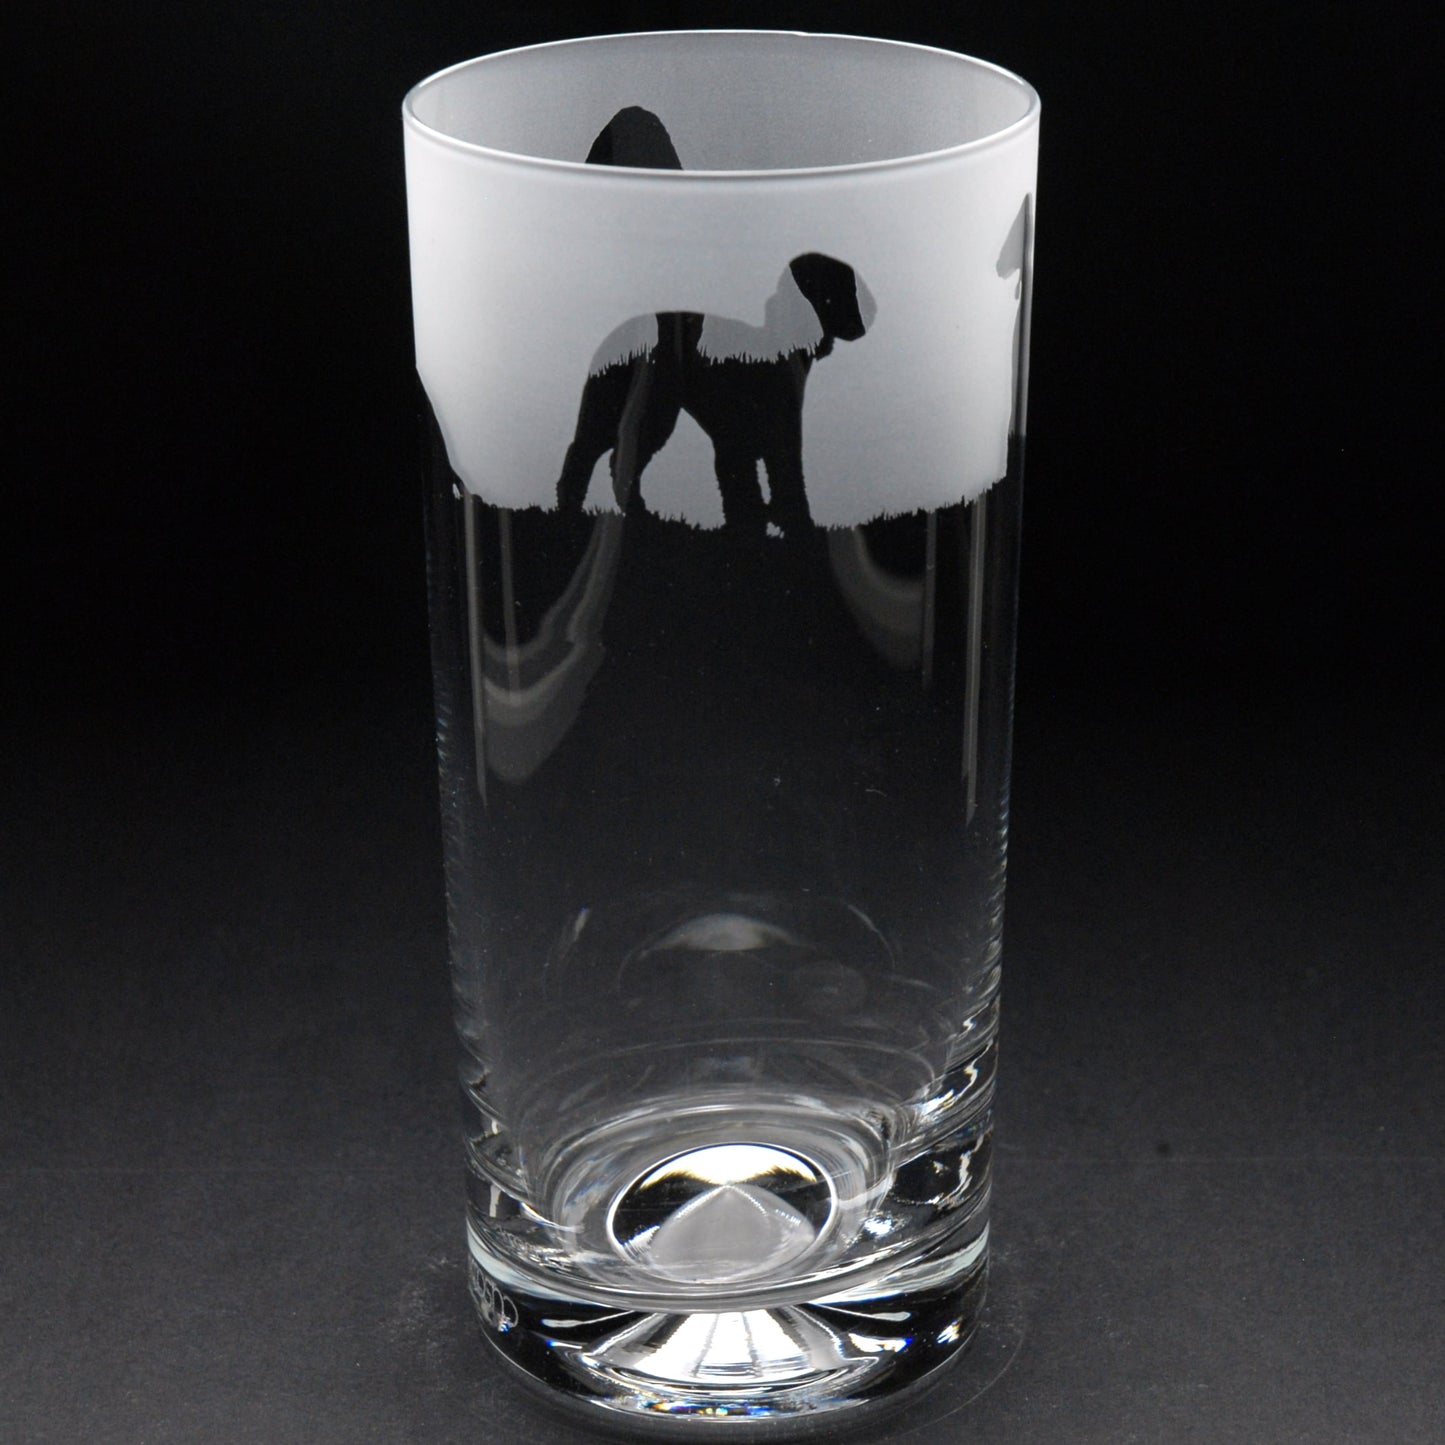 Bedlington Terrier Dog Highball Glass - Hand Etched/Engraved Gift